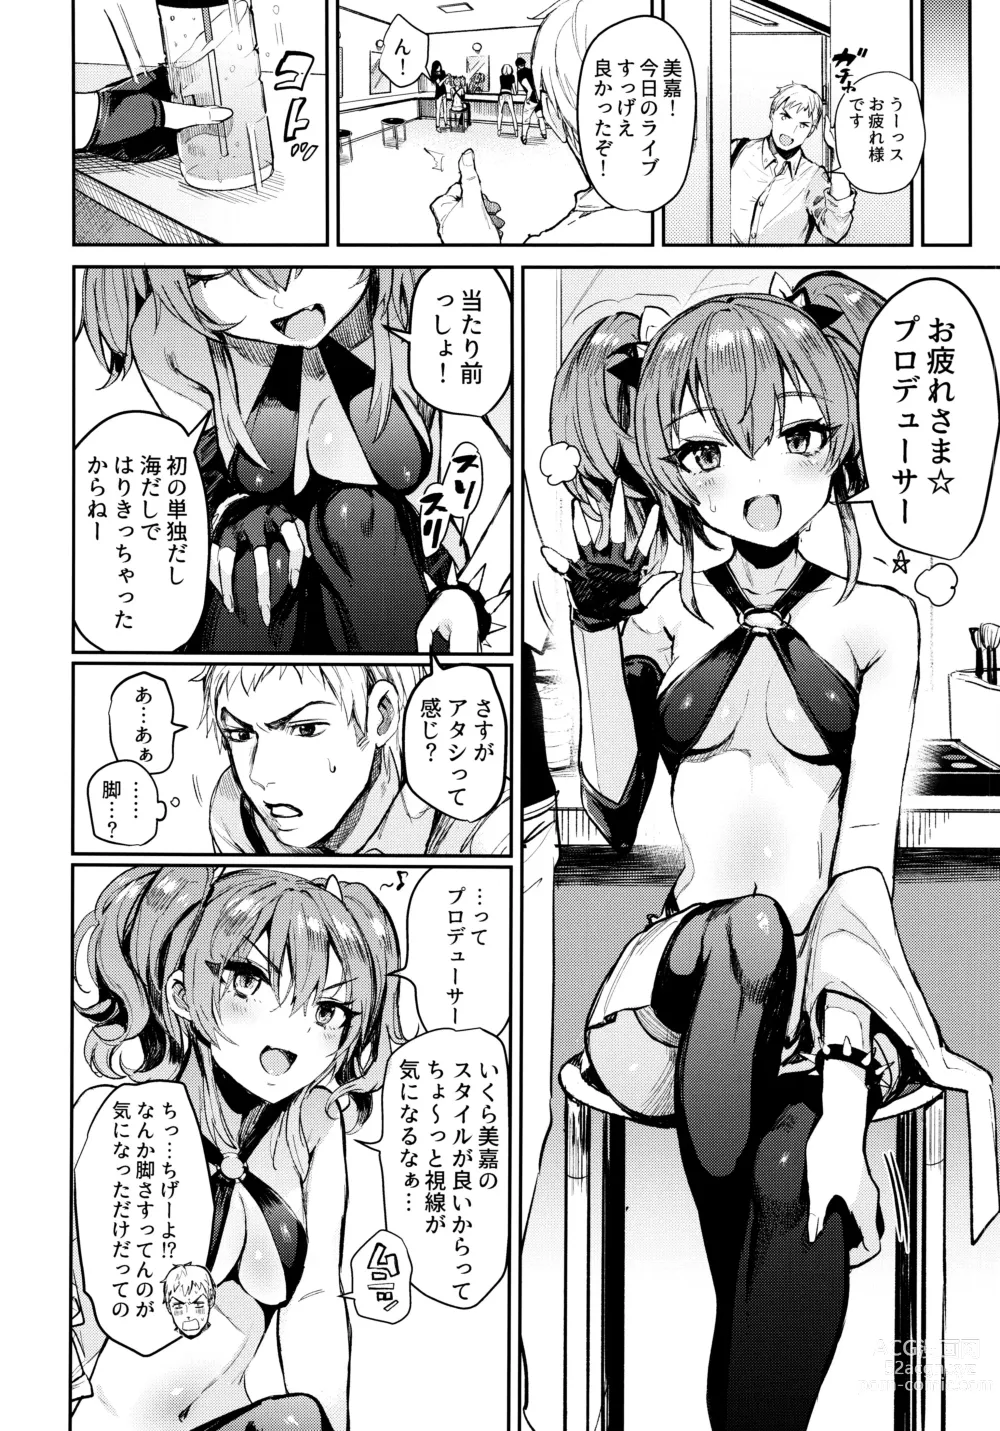 Page 5 of doujinshi Mika to Futari de.